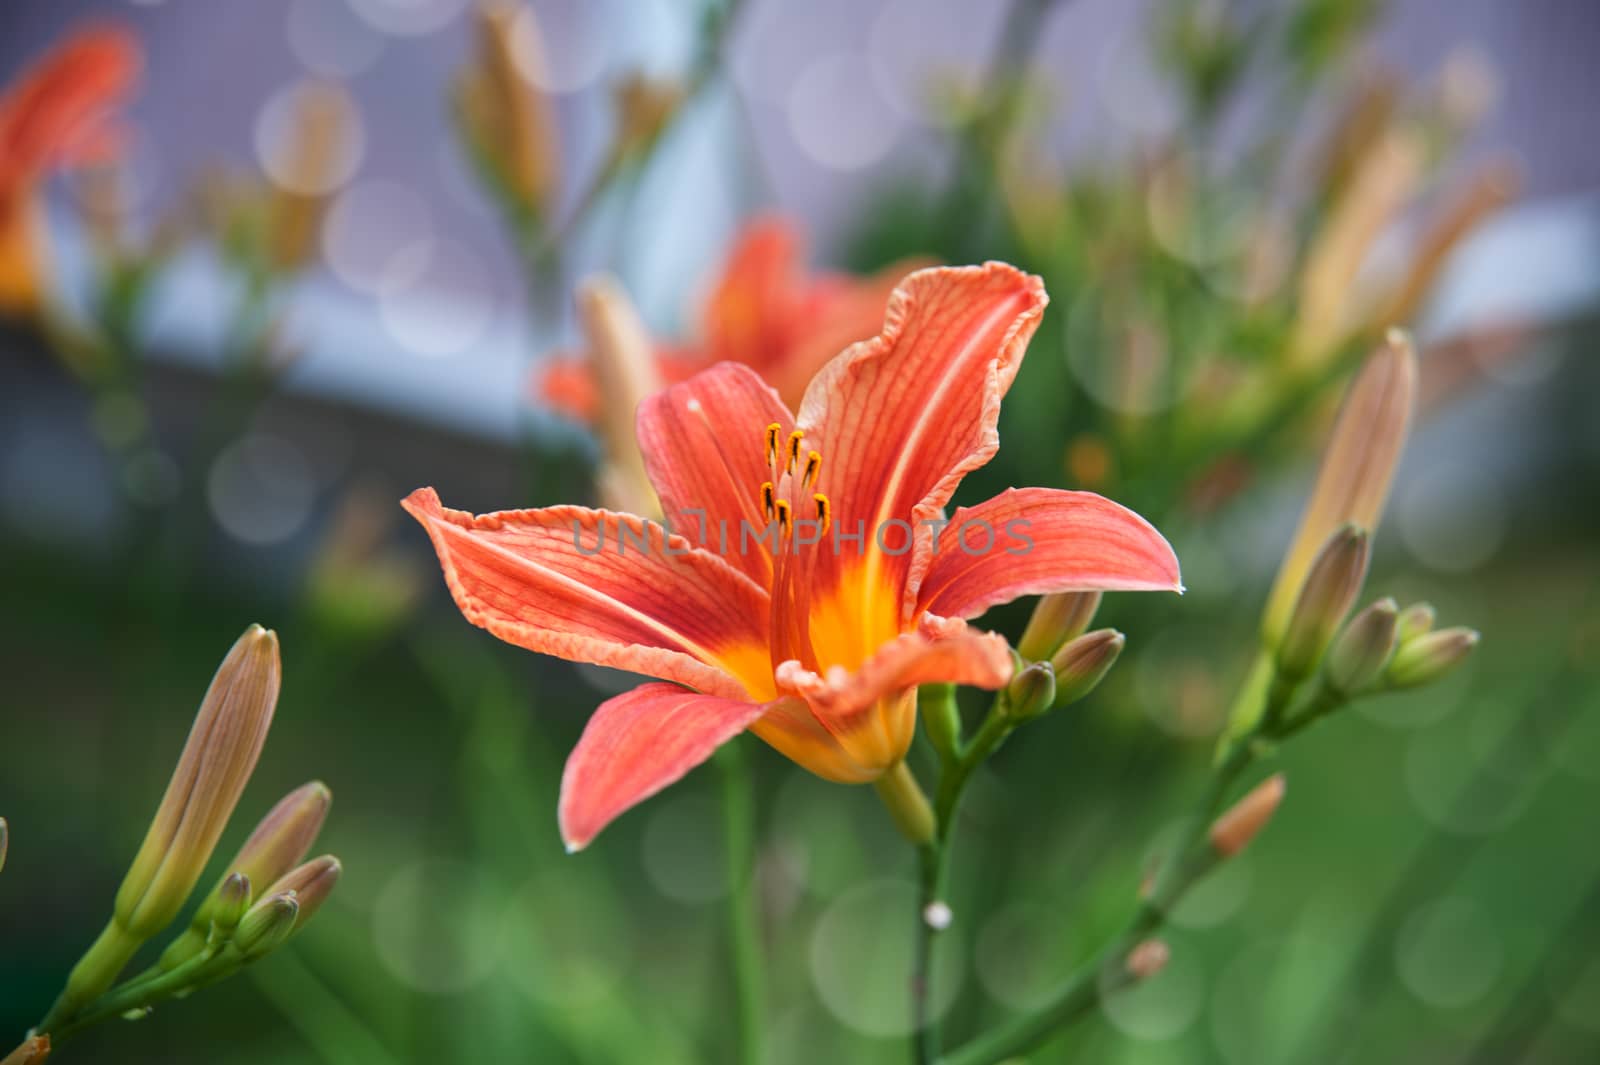 Orange Day Lily by raduga21